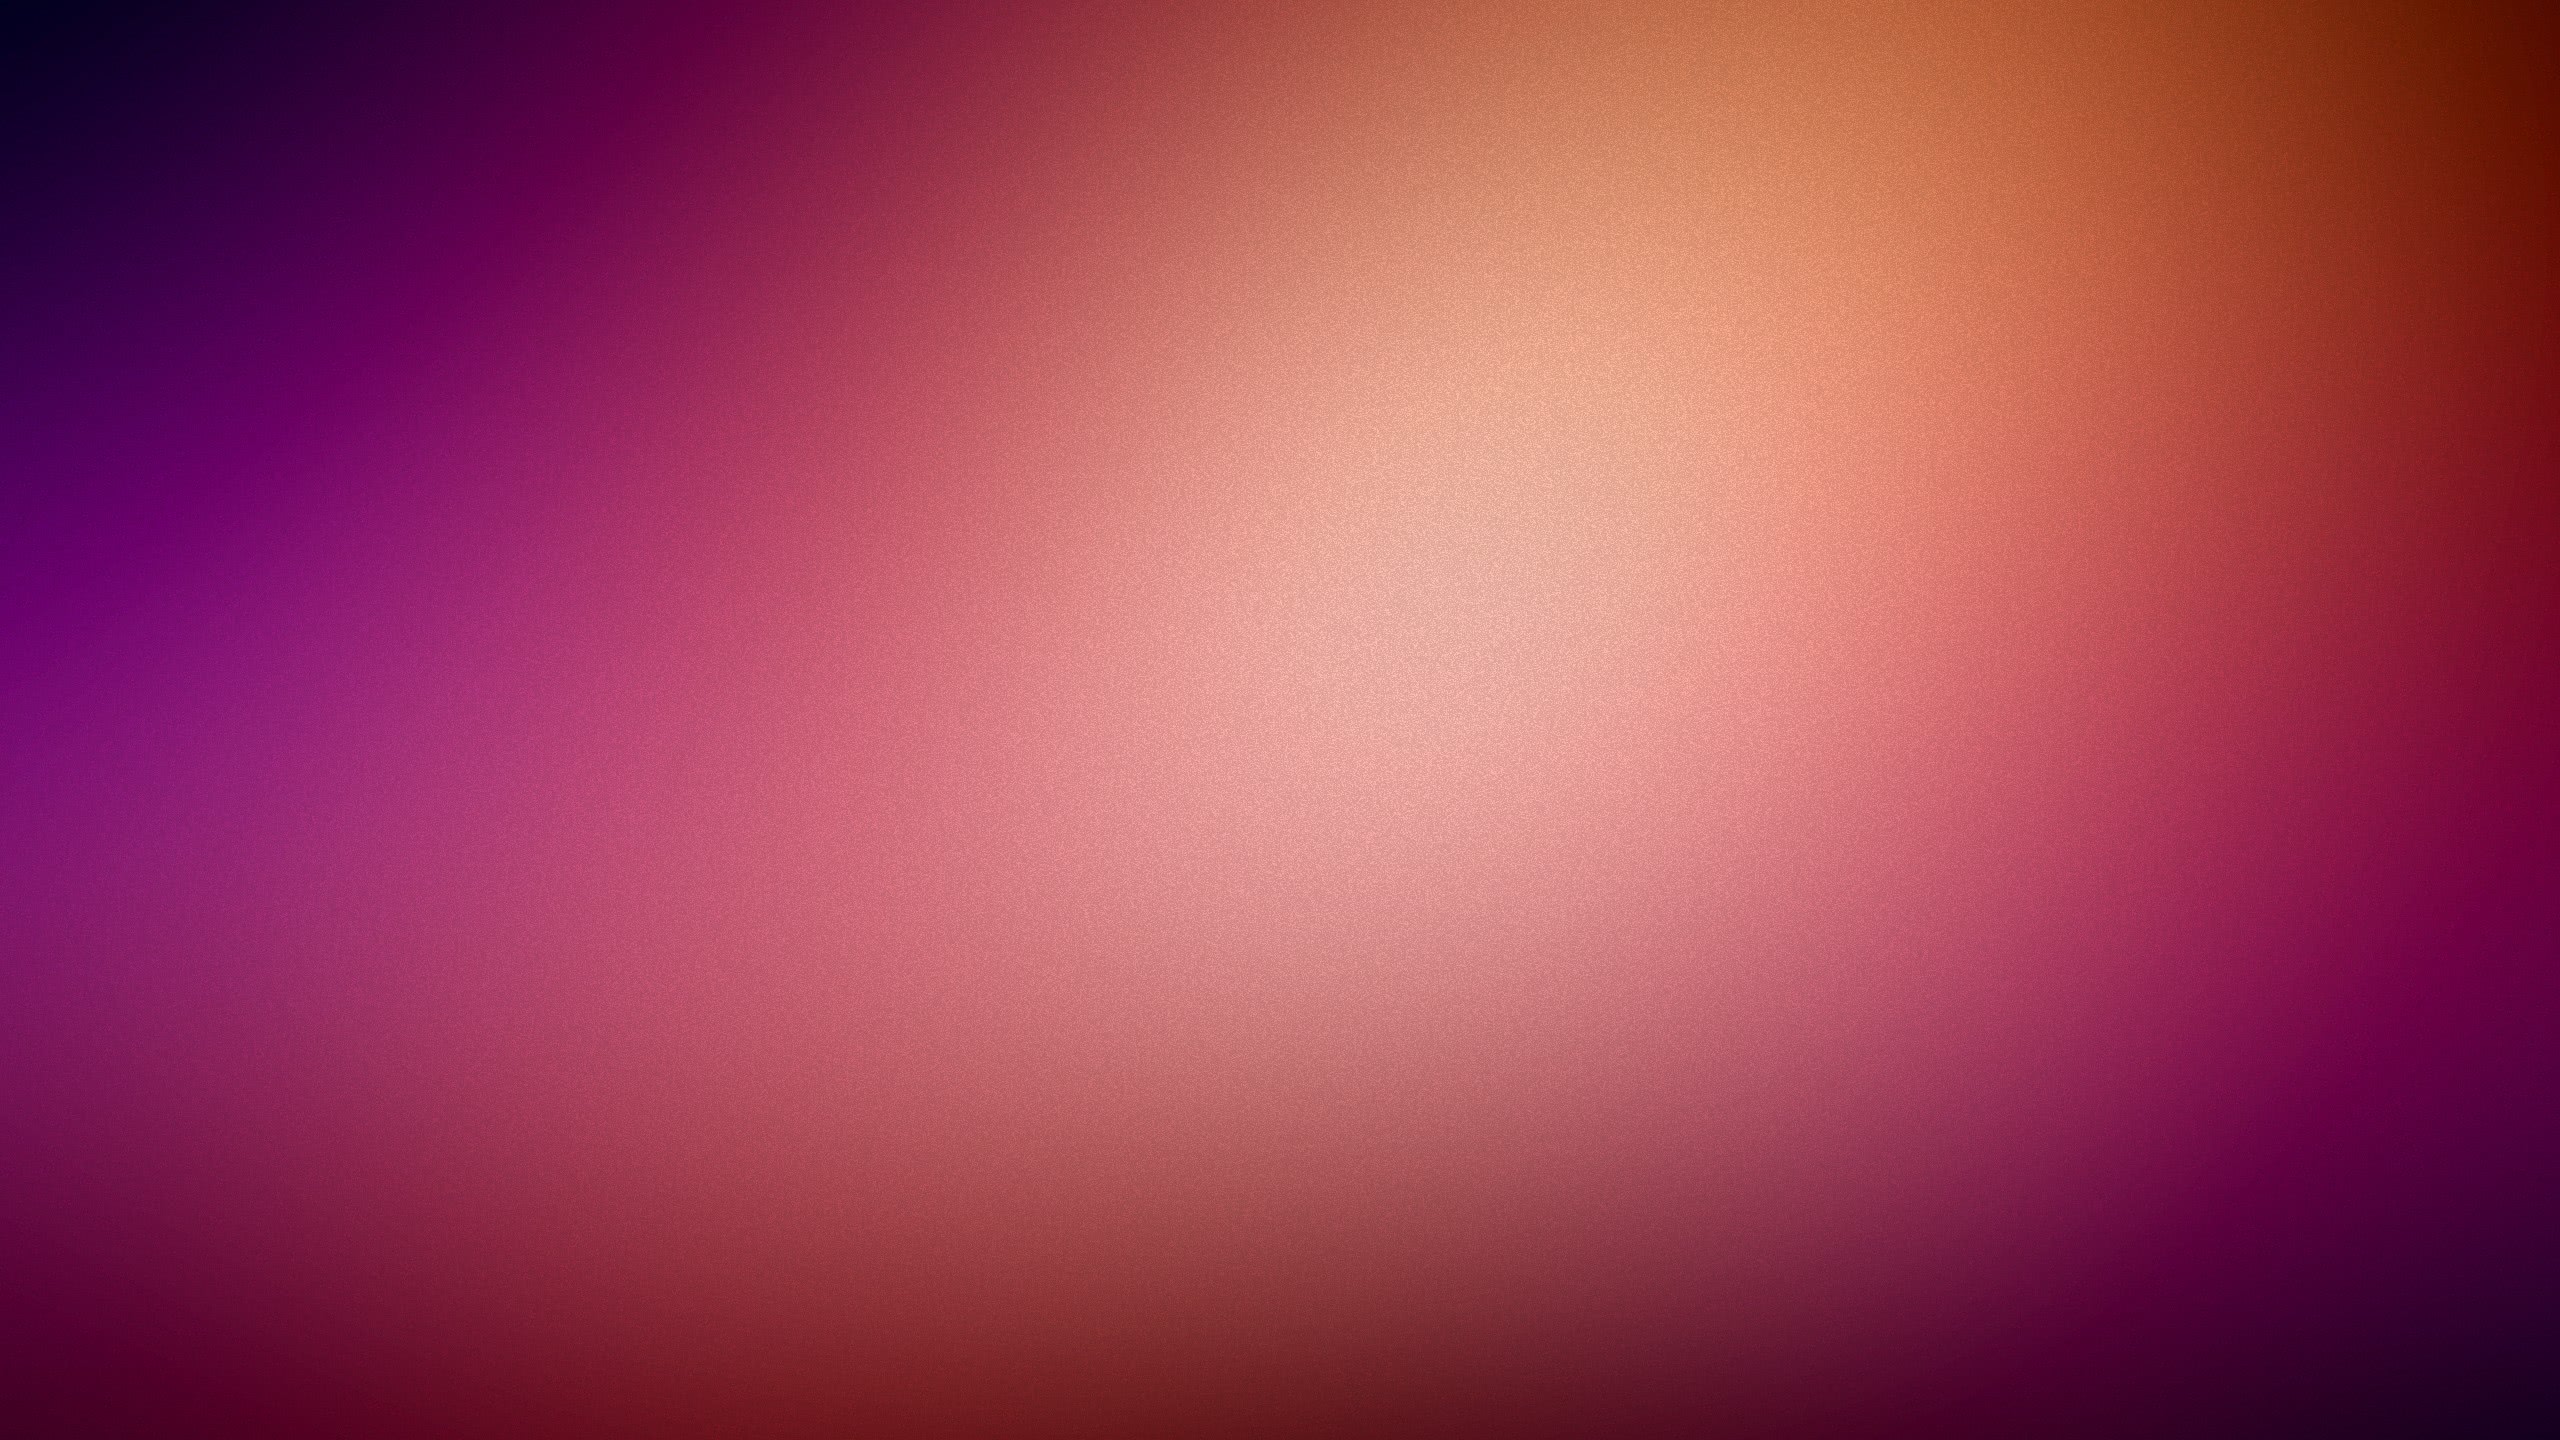 Gradient Red Pink WqHD 1440p Wallpaper